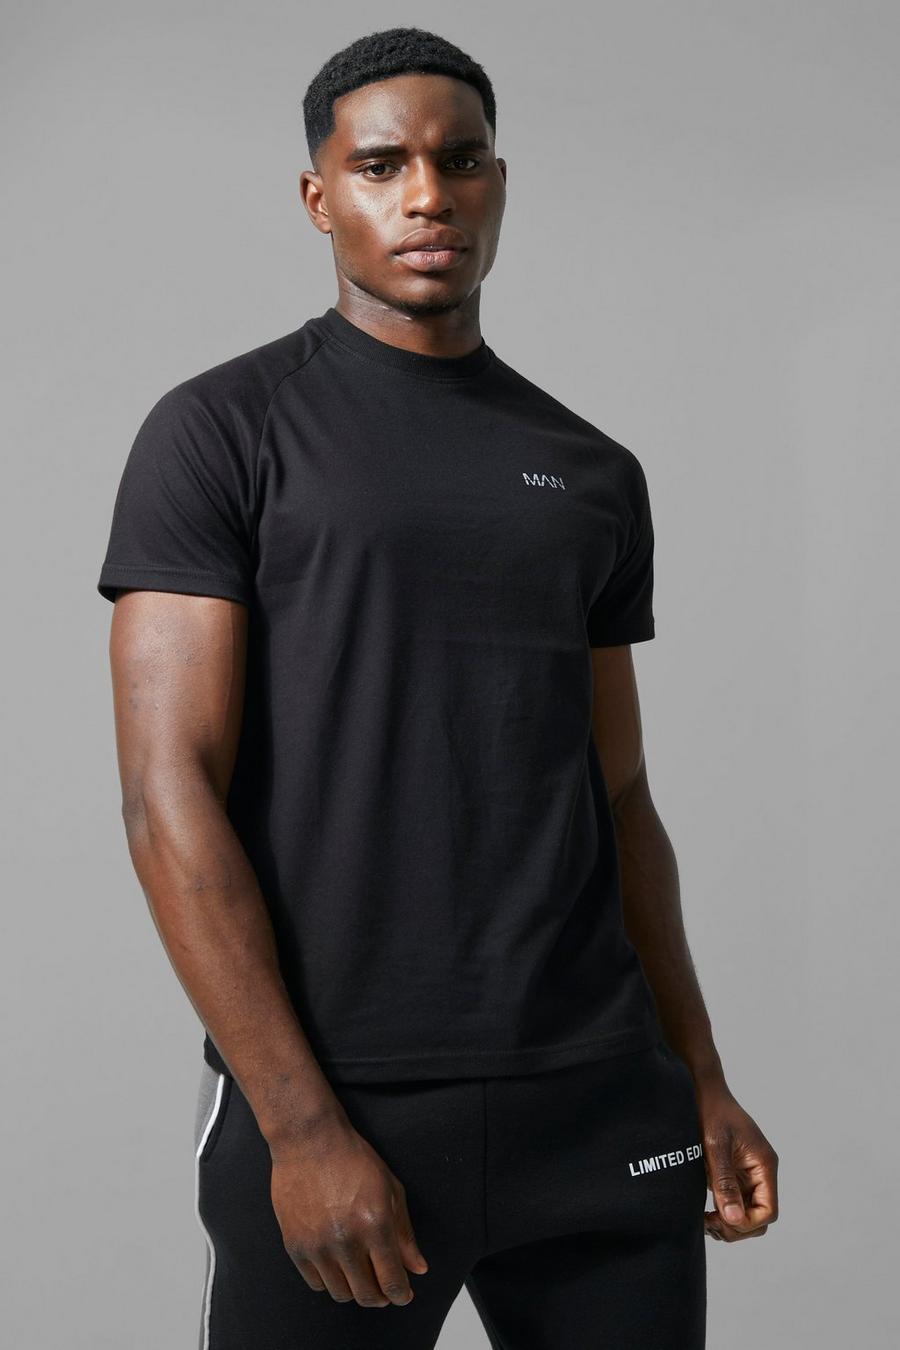 Black Man Active Raglan Fitness T-Shirt